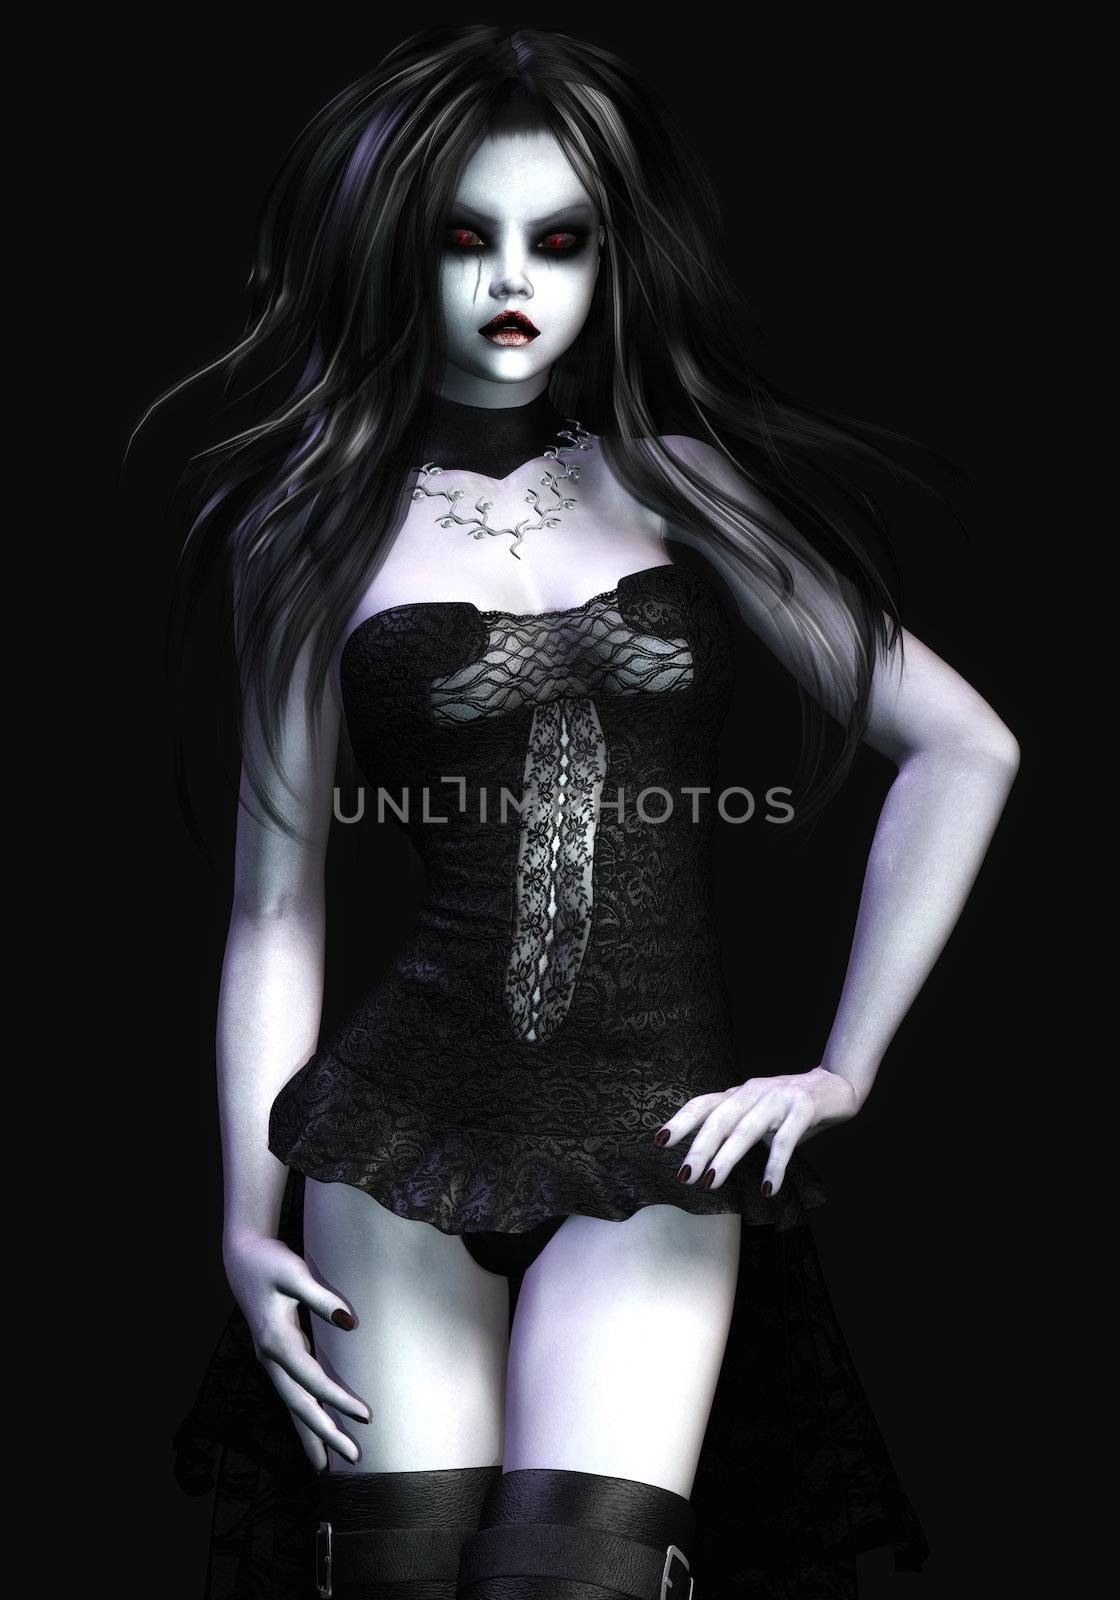 Digital Illustration of a gothic Female